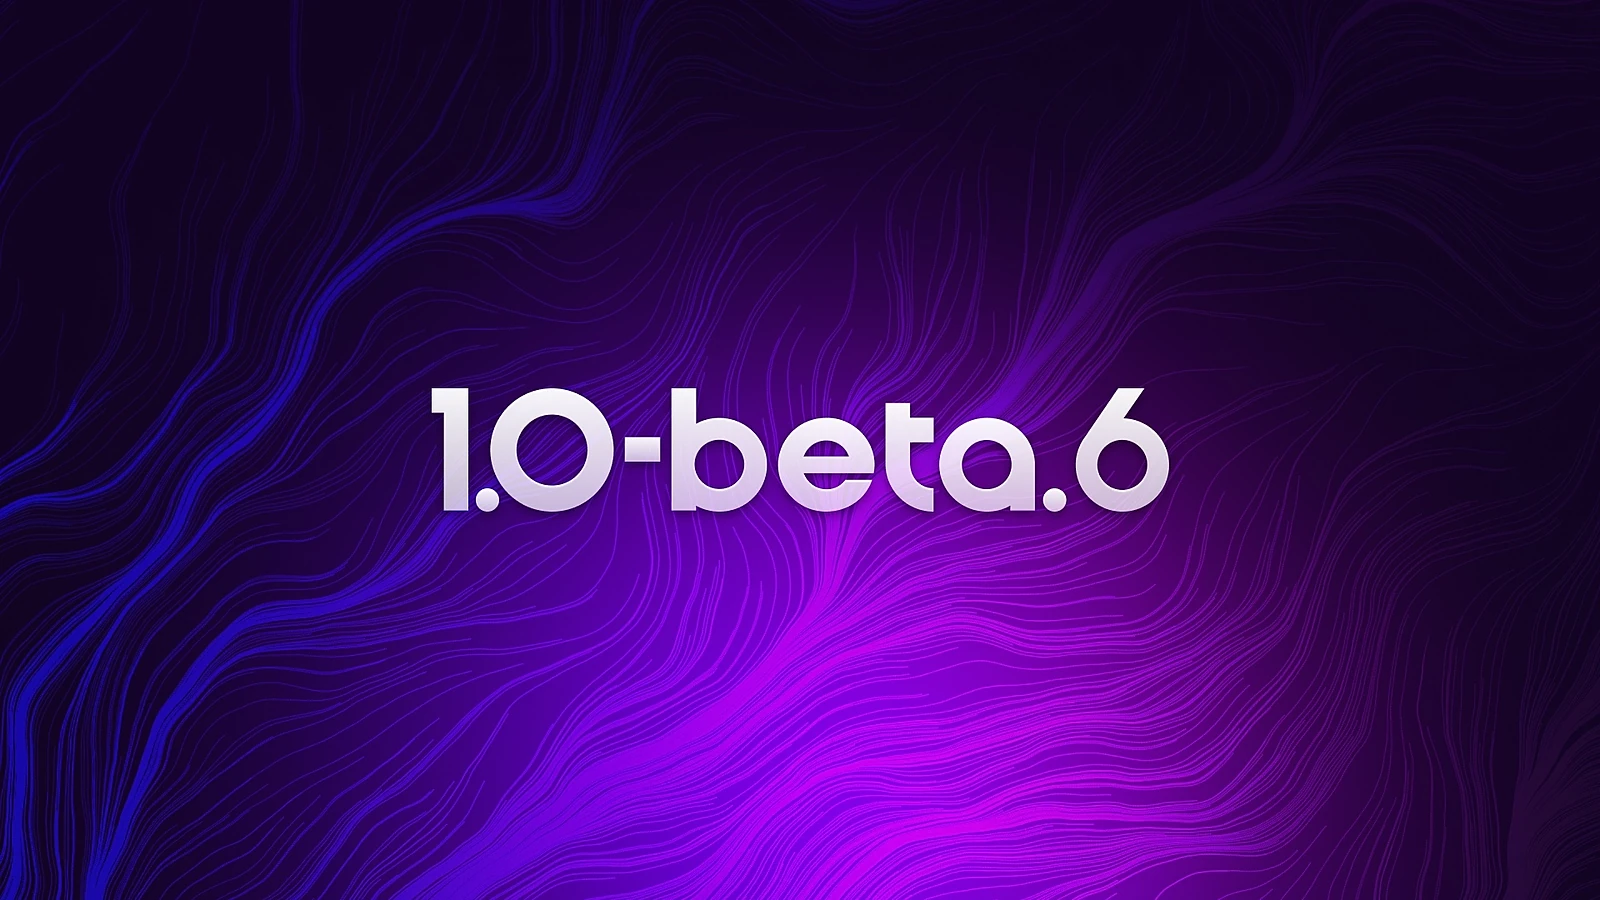 Release v1.0.0-beta.6